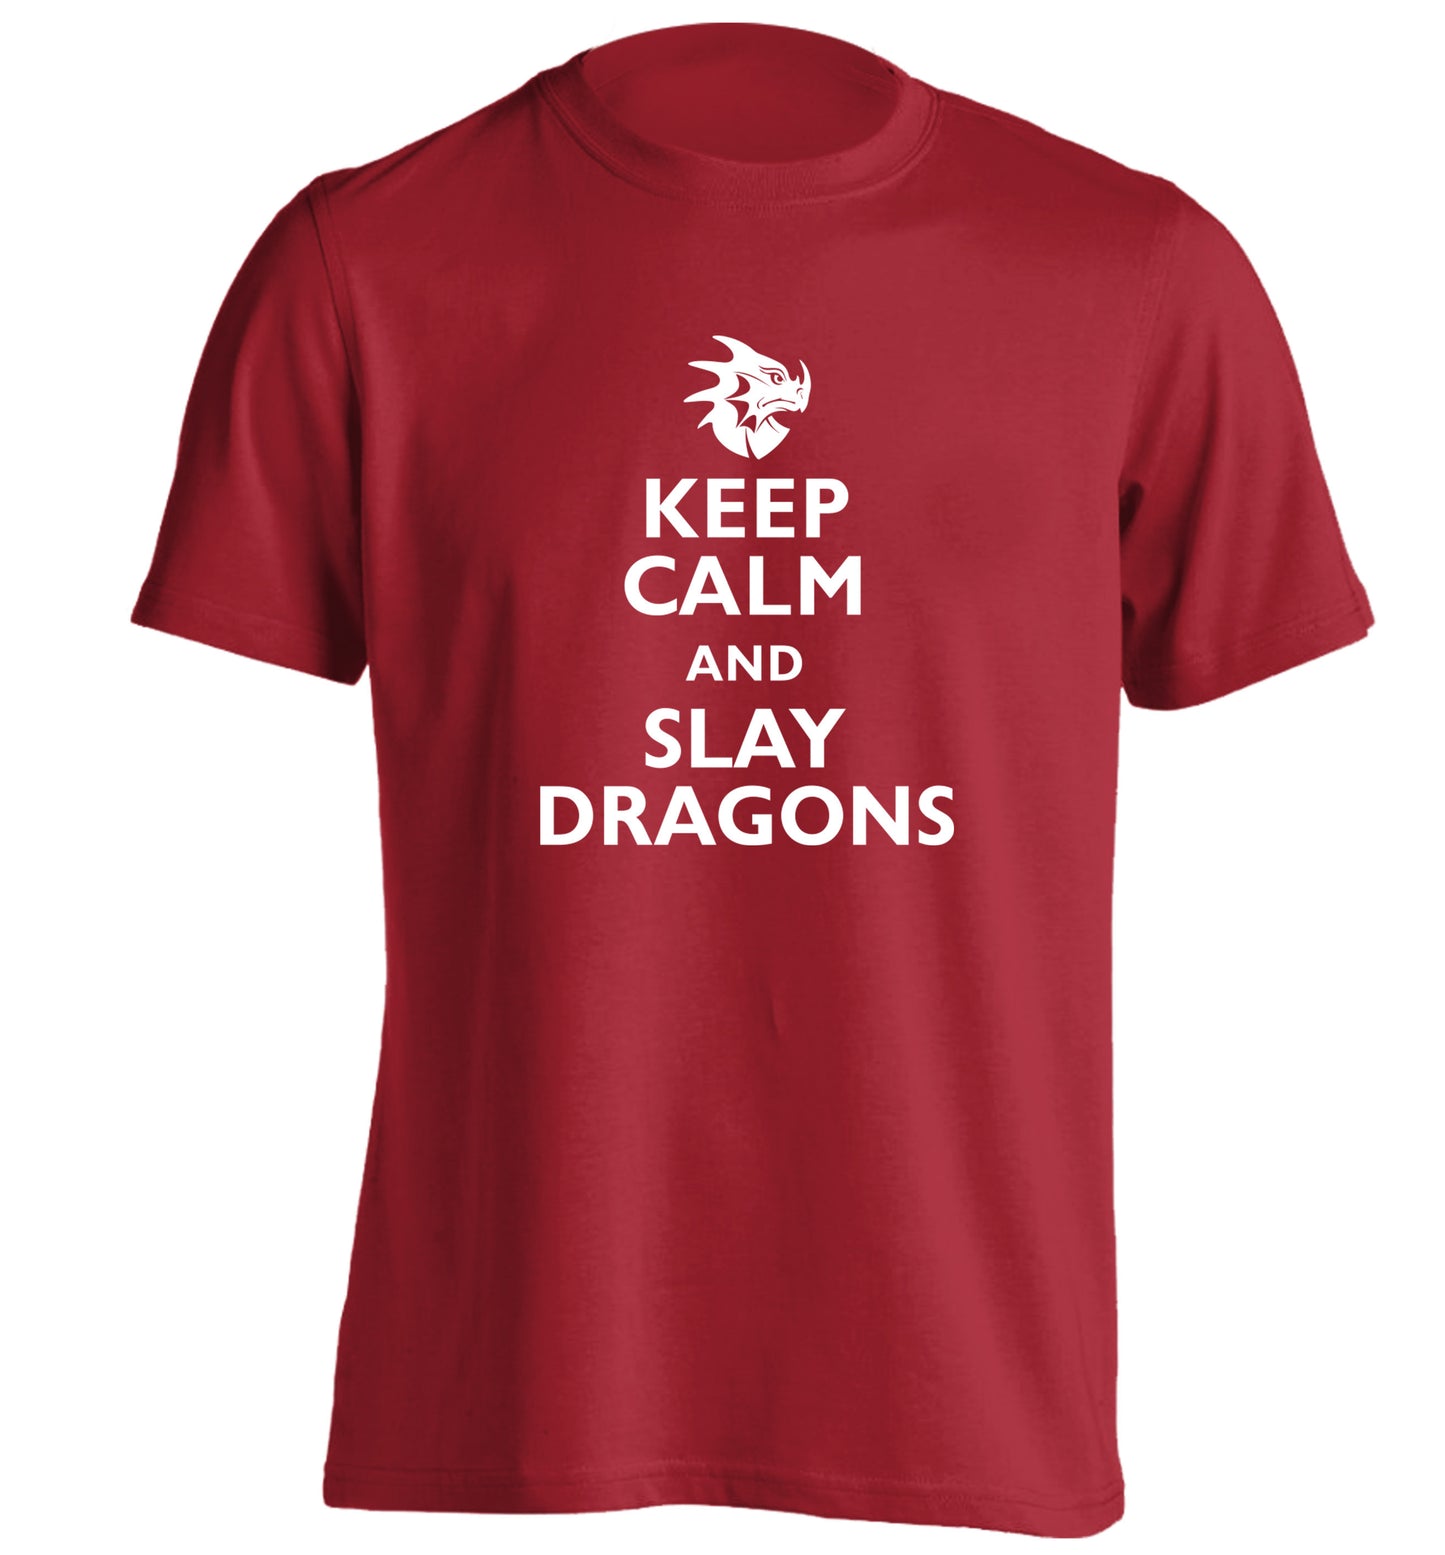 Keep calm and slay dragons adults unisex red Tshirt 2XL